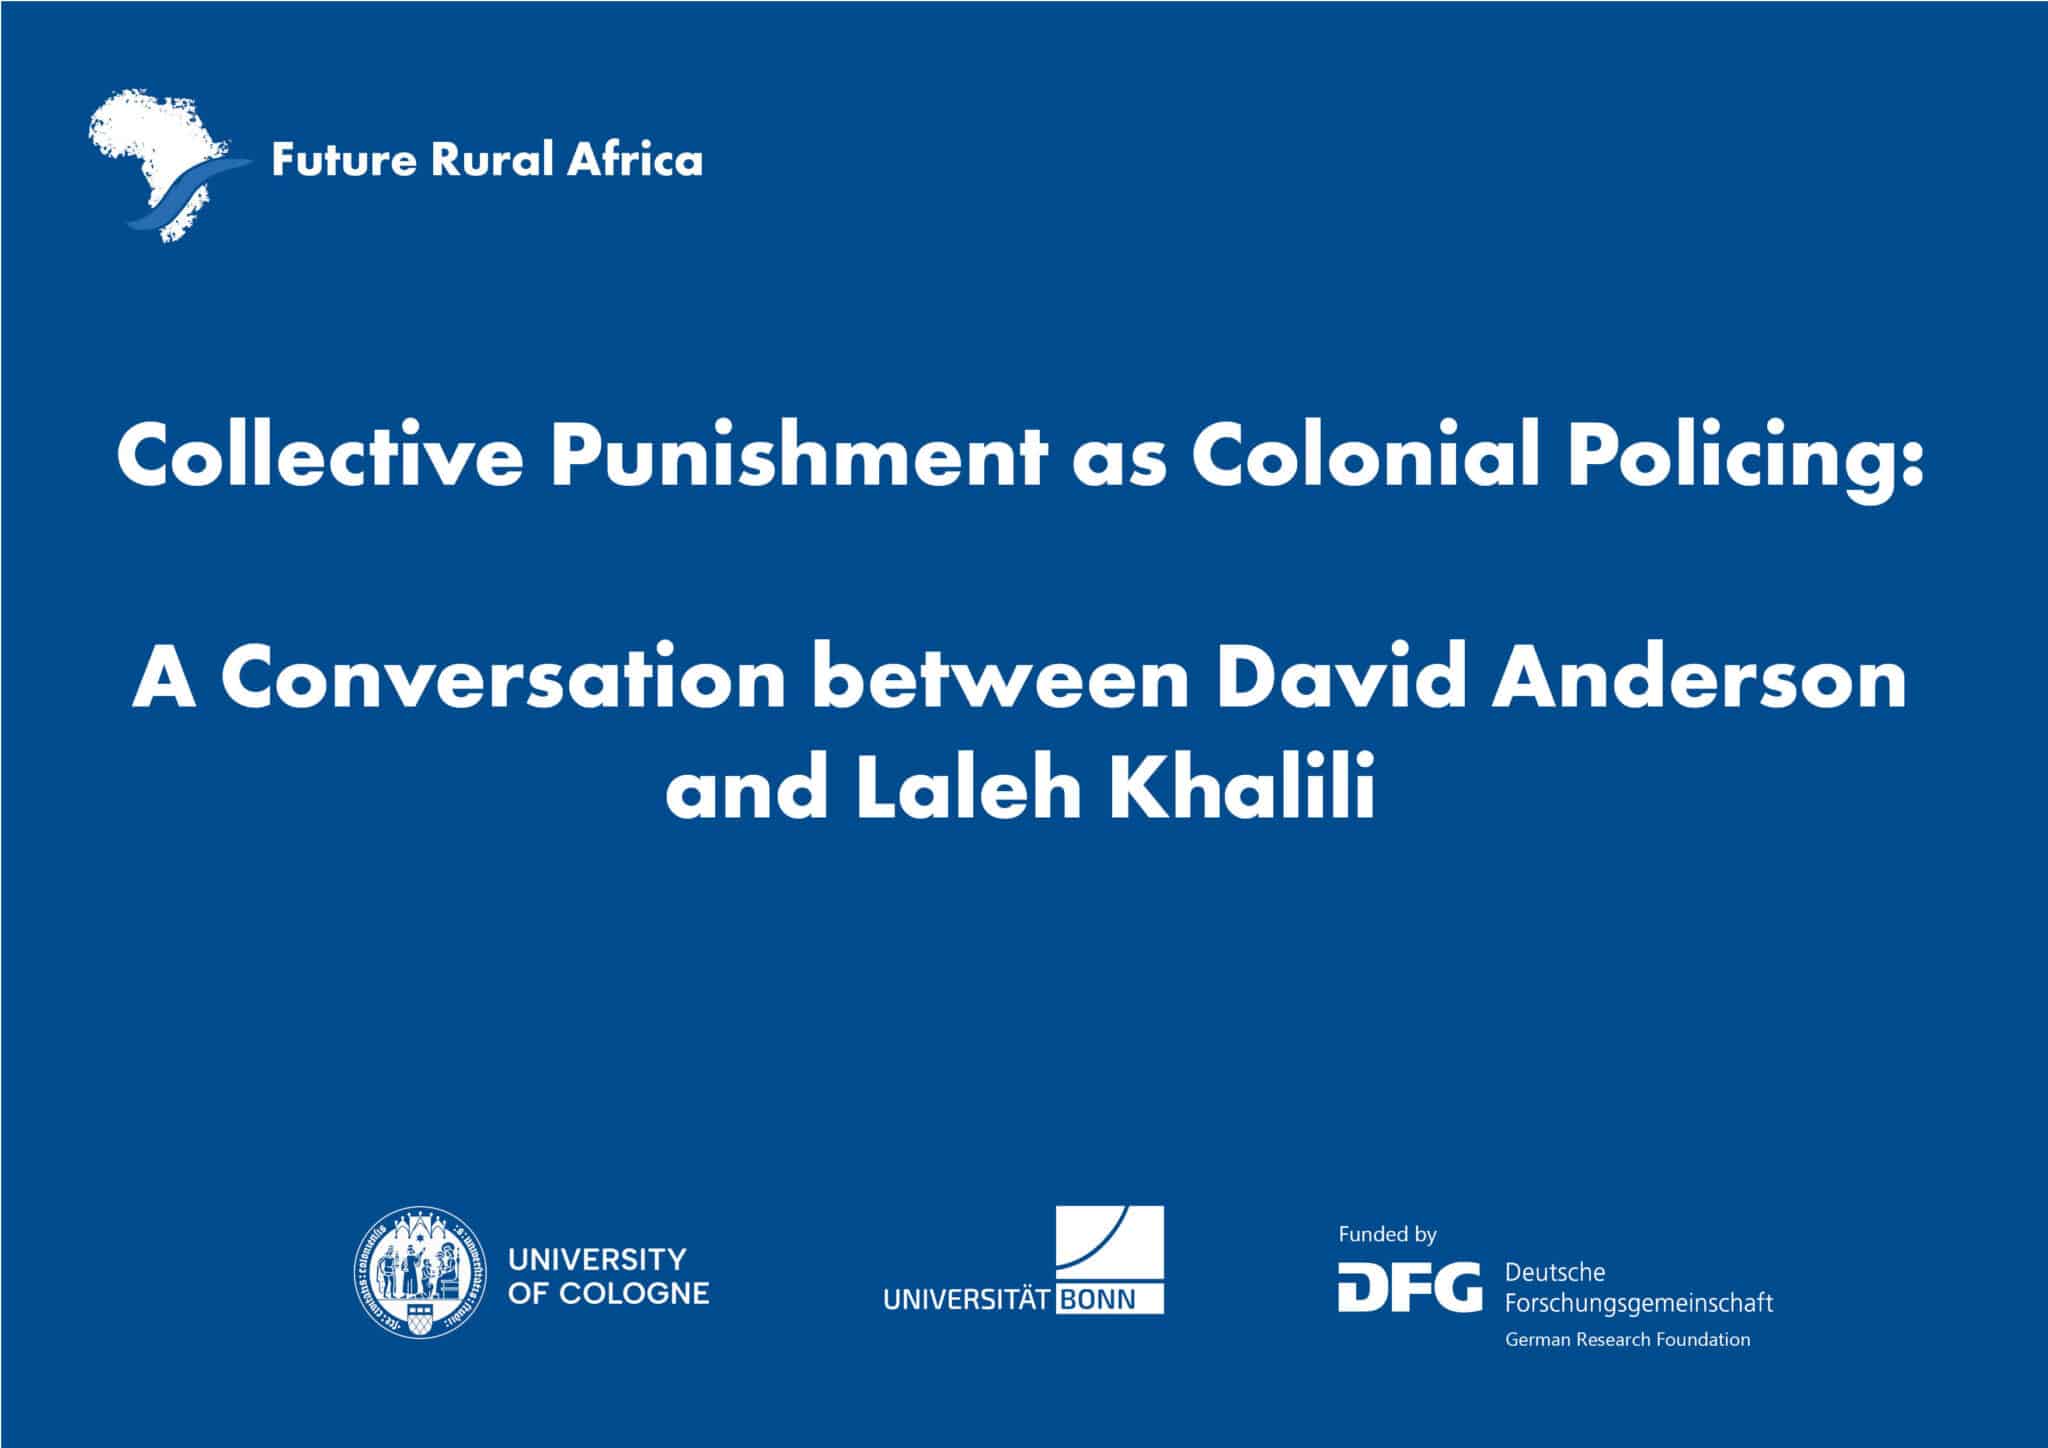 Cover for a talk between David Anderson and Laleh Khalili